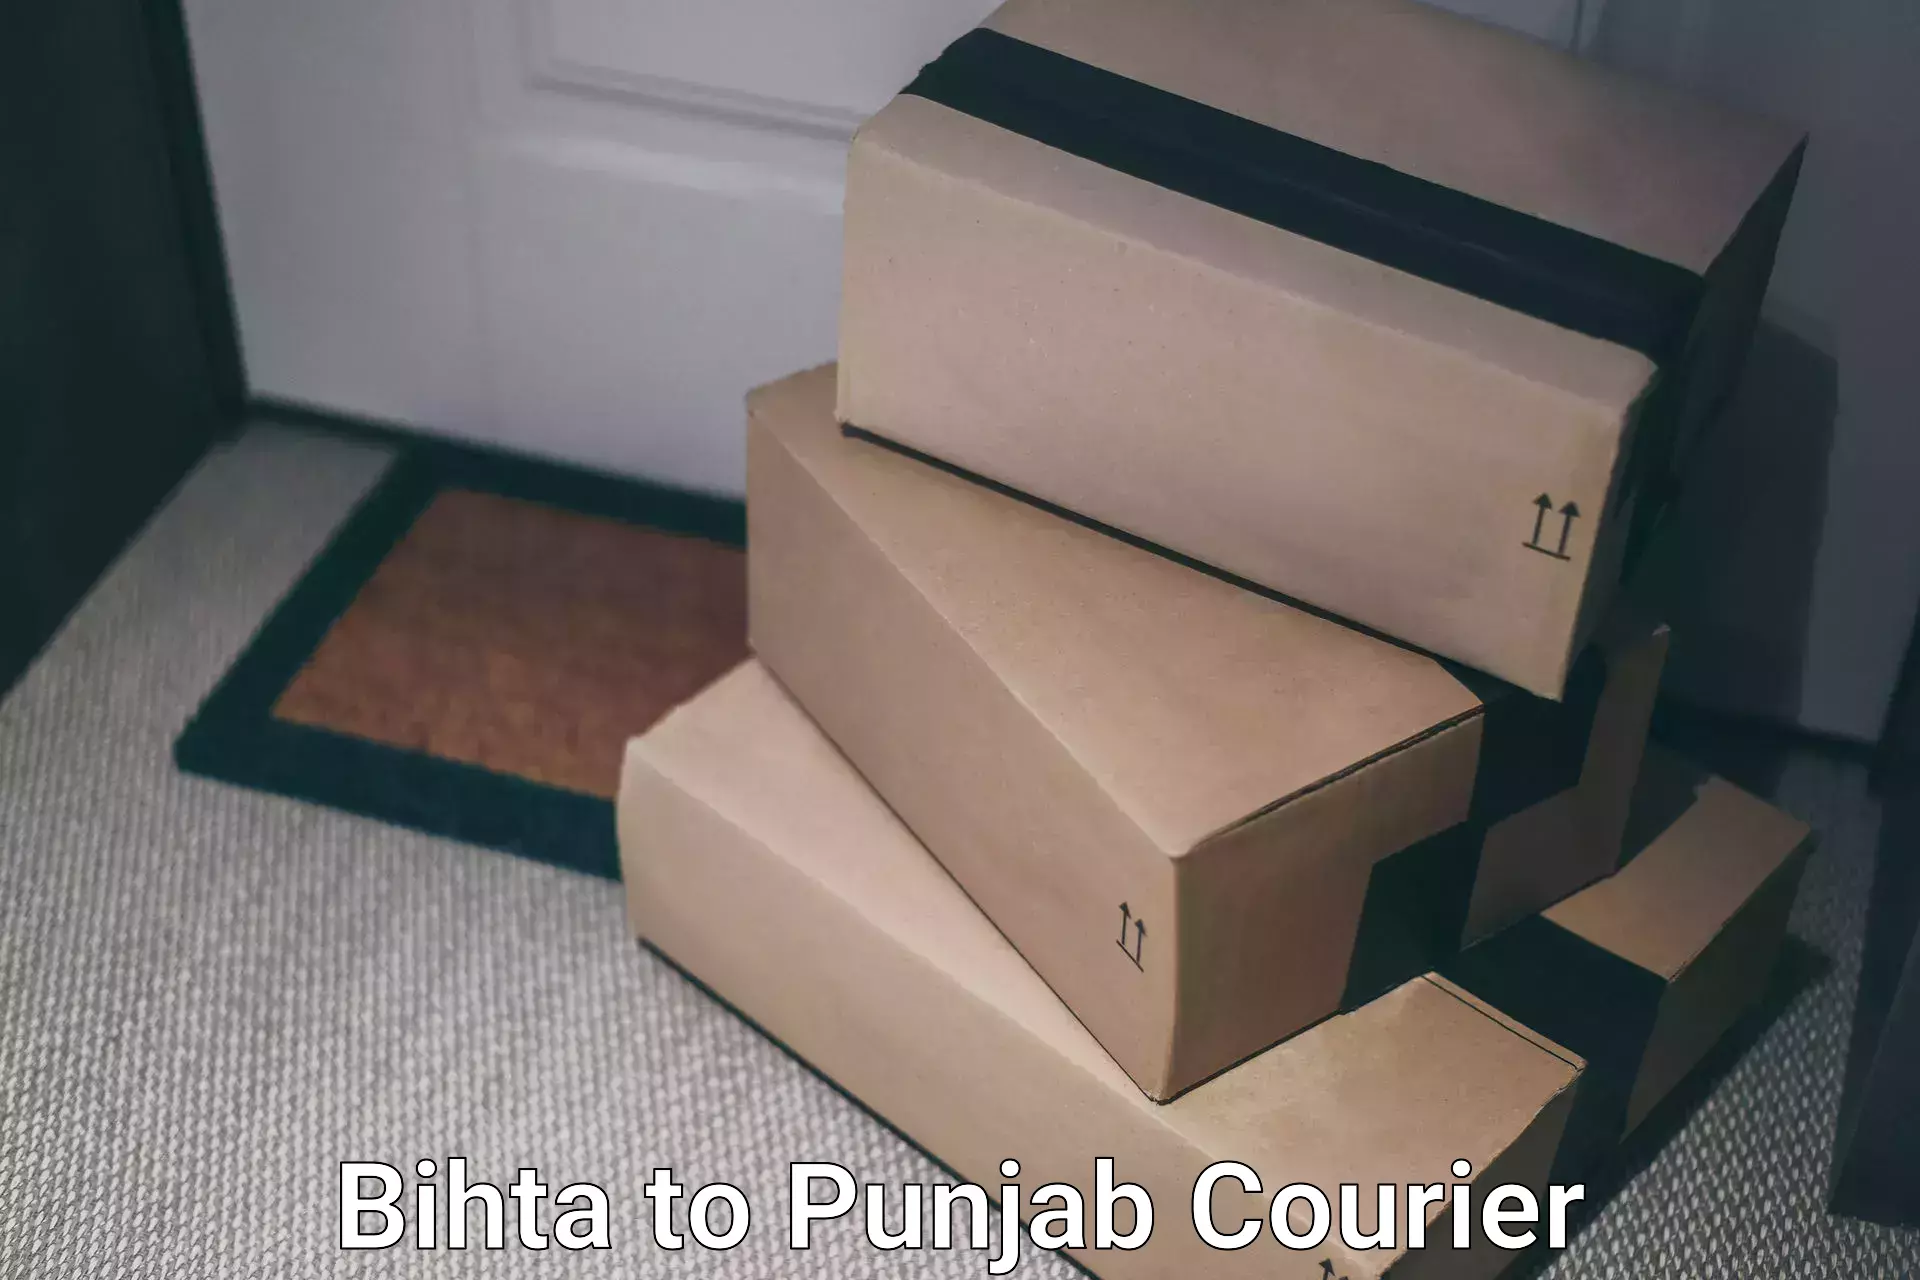 Optimized delivery routes Bihta to Fatehgarh Sahib